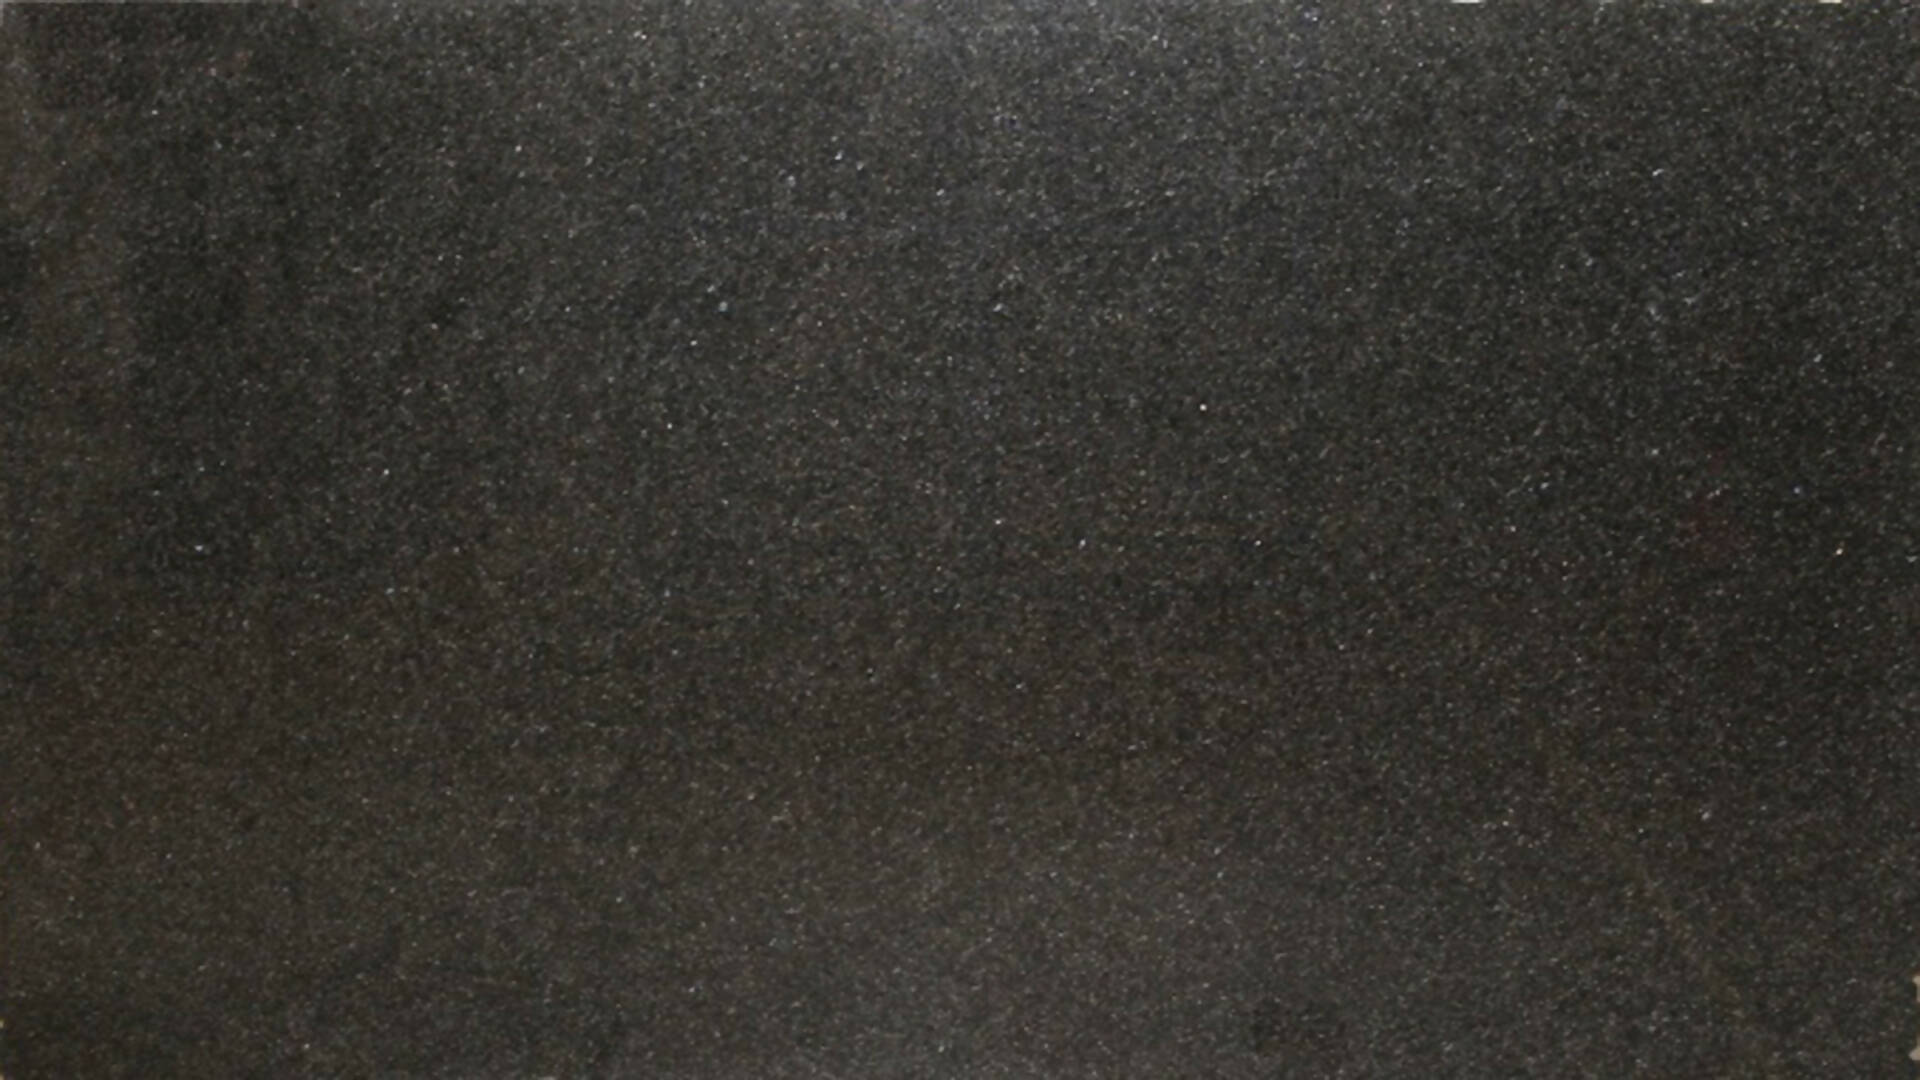 EMERALD BLACK GRANITE,Granite,KSG UK LTD,www.work-tops.com